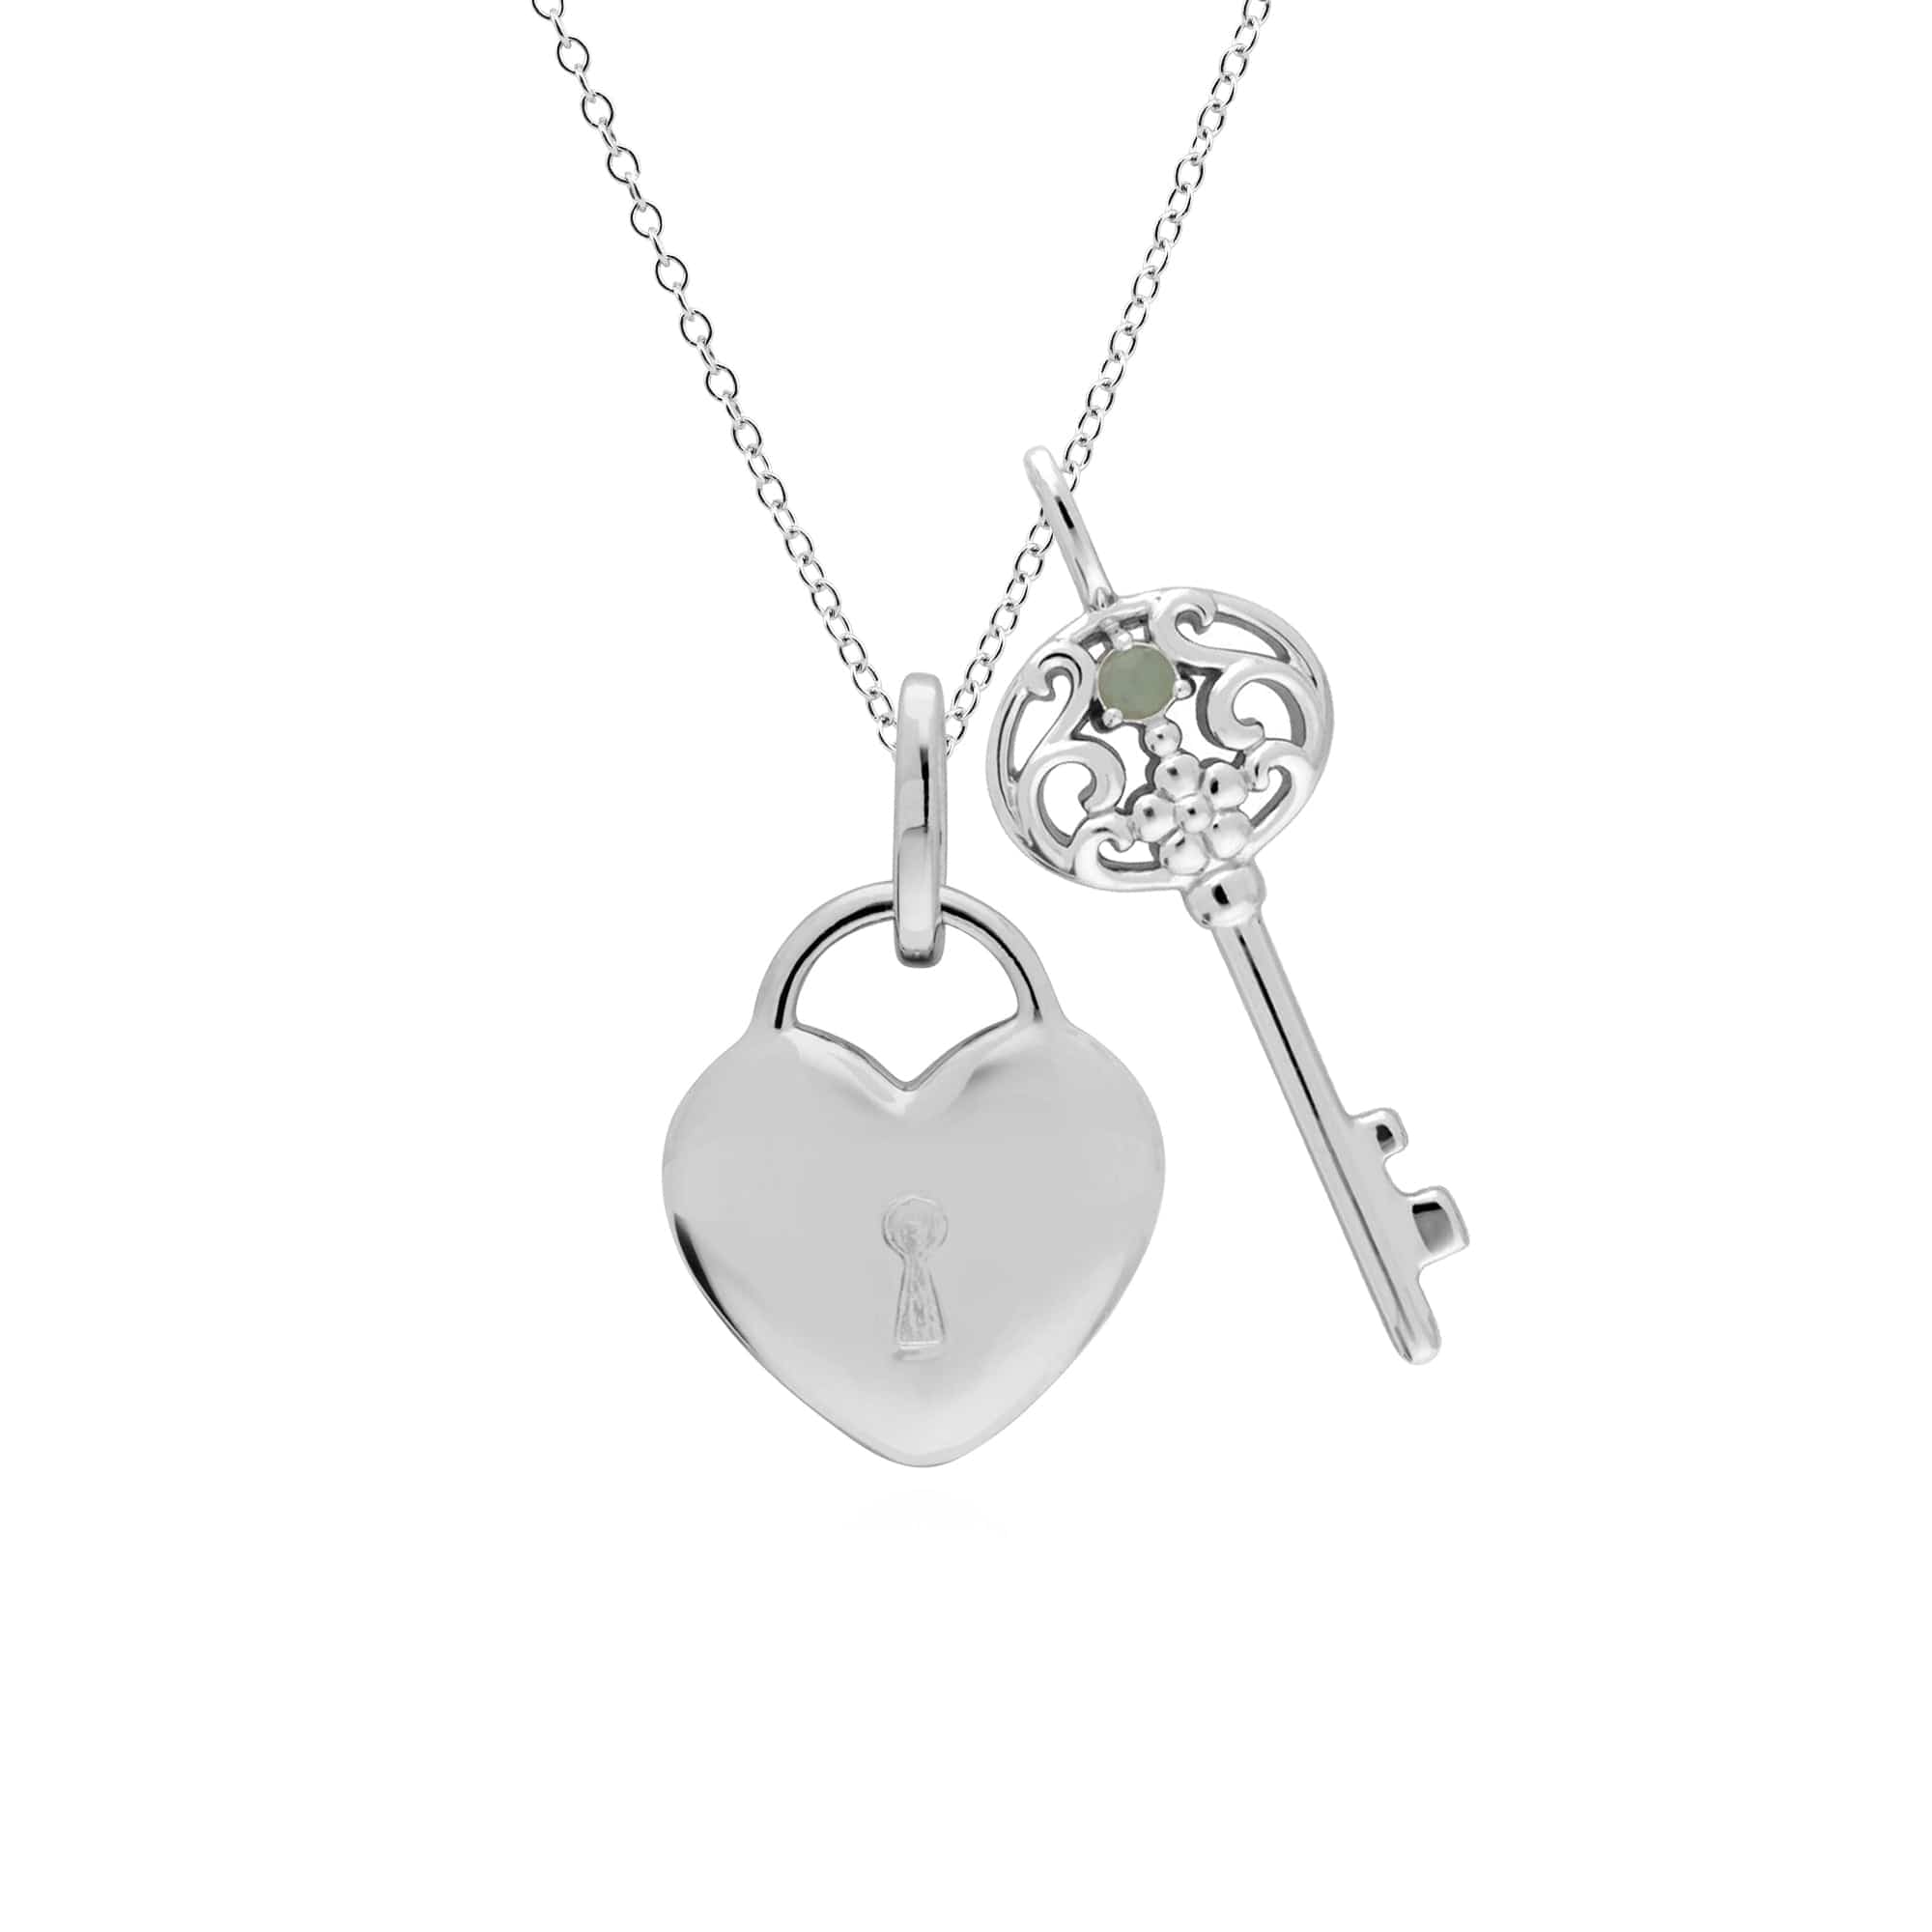 270P026802925-270P027001925 Classic Heart Lock Pendant & Jade Big Key Charm in 925 Sterling Silver 1